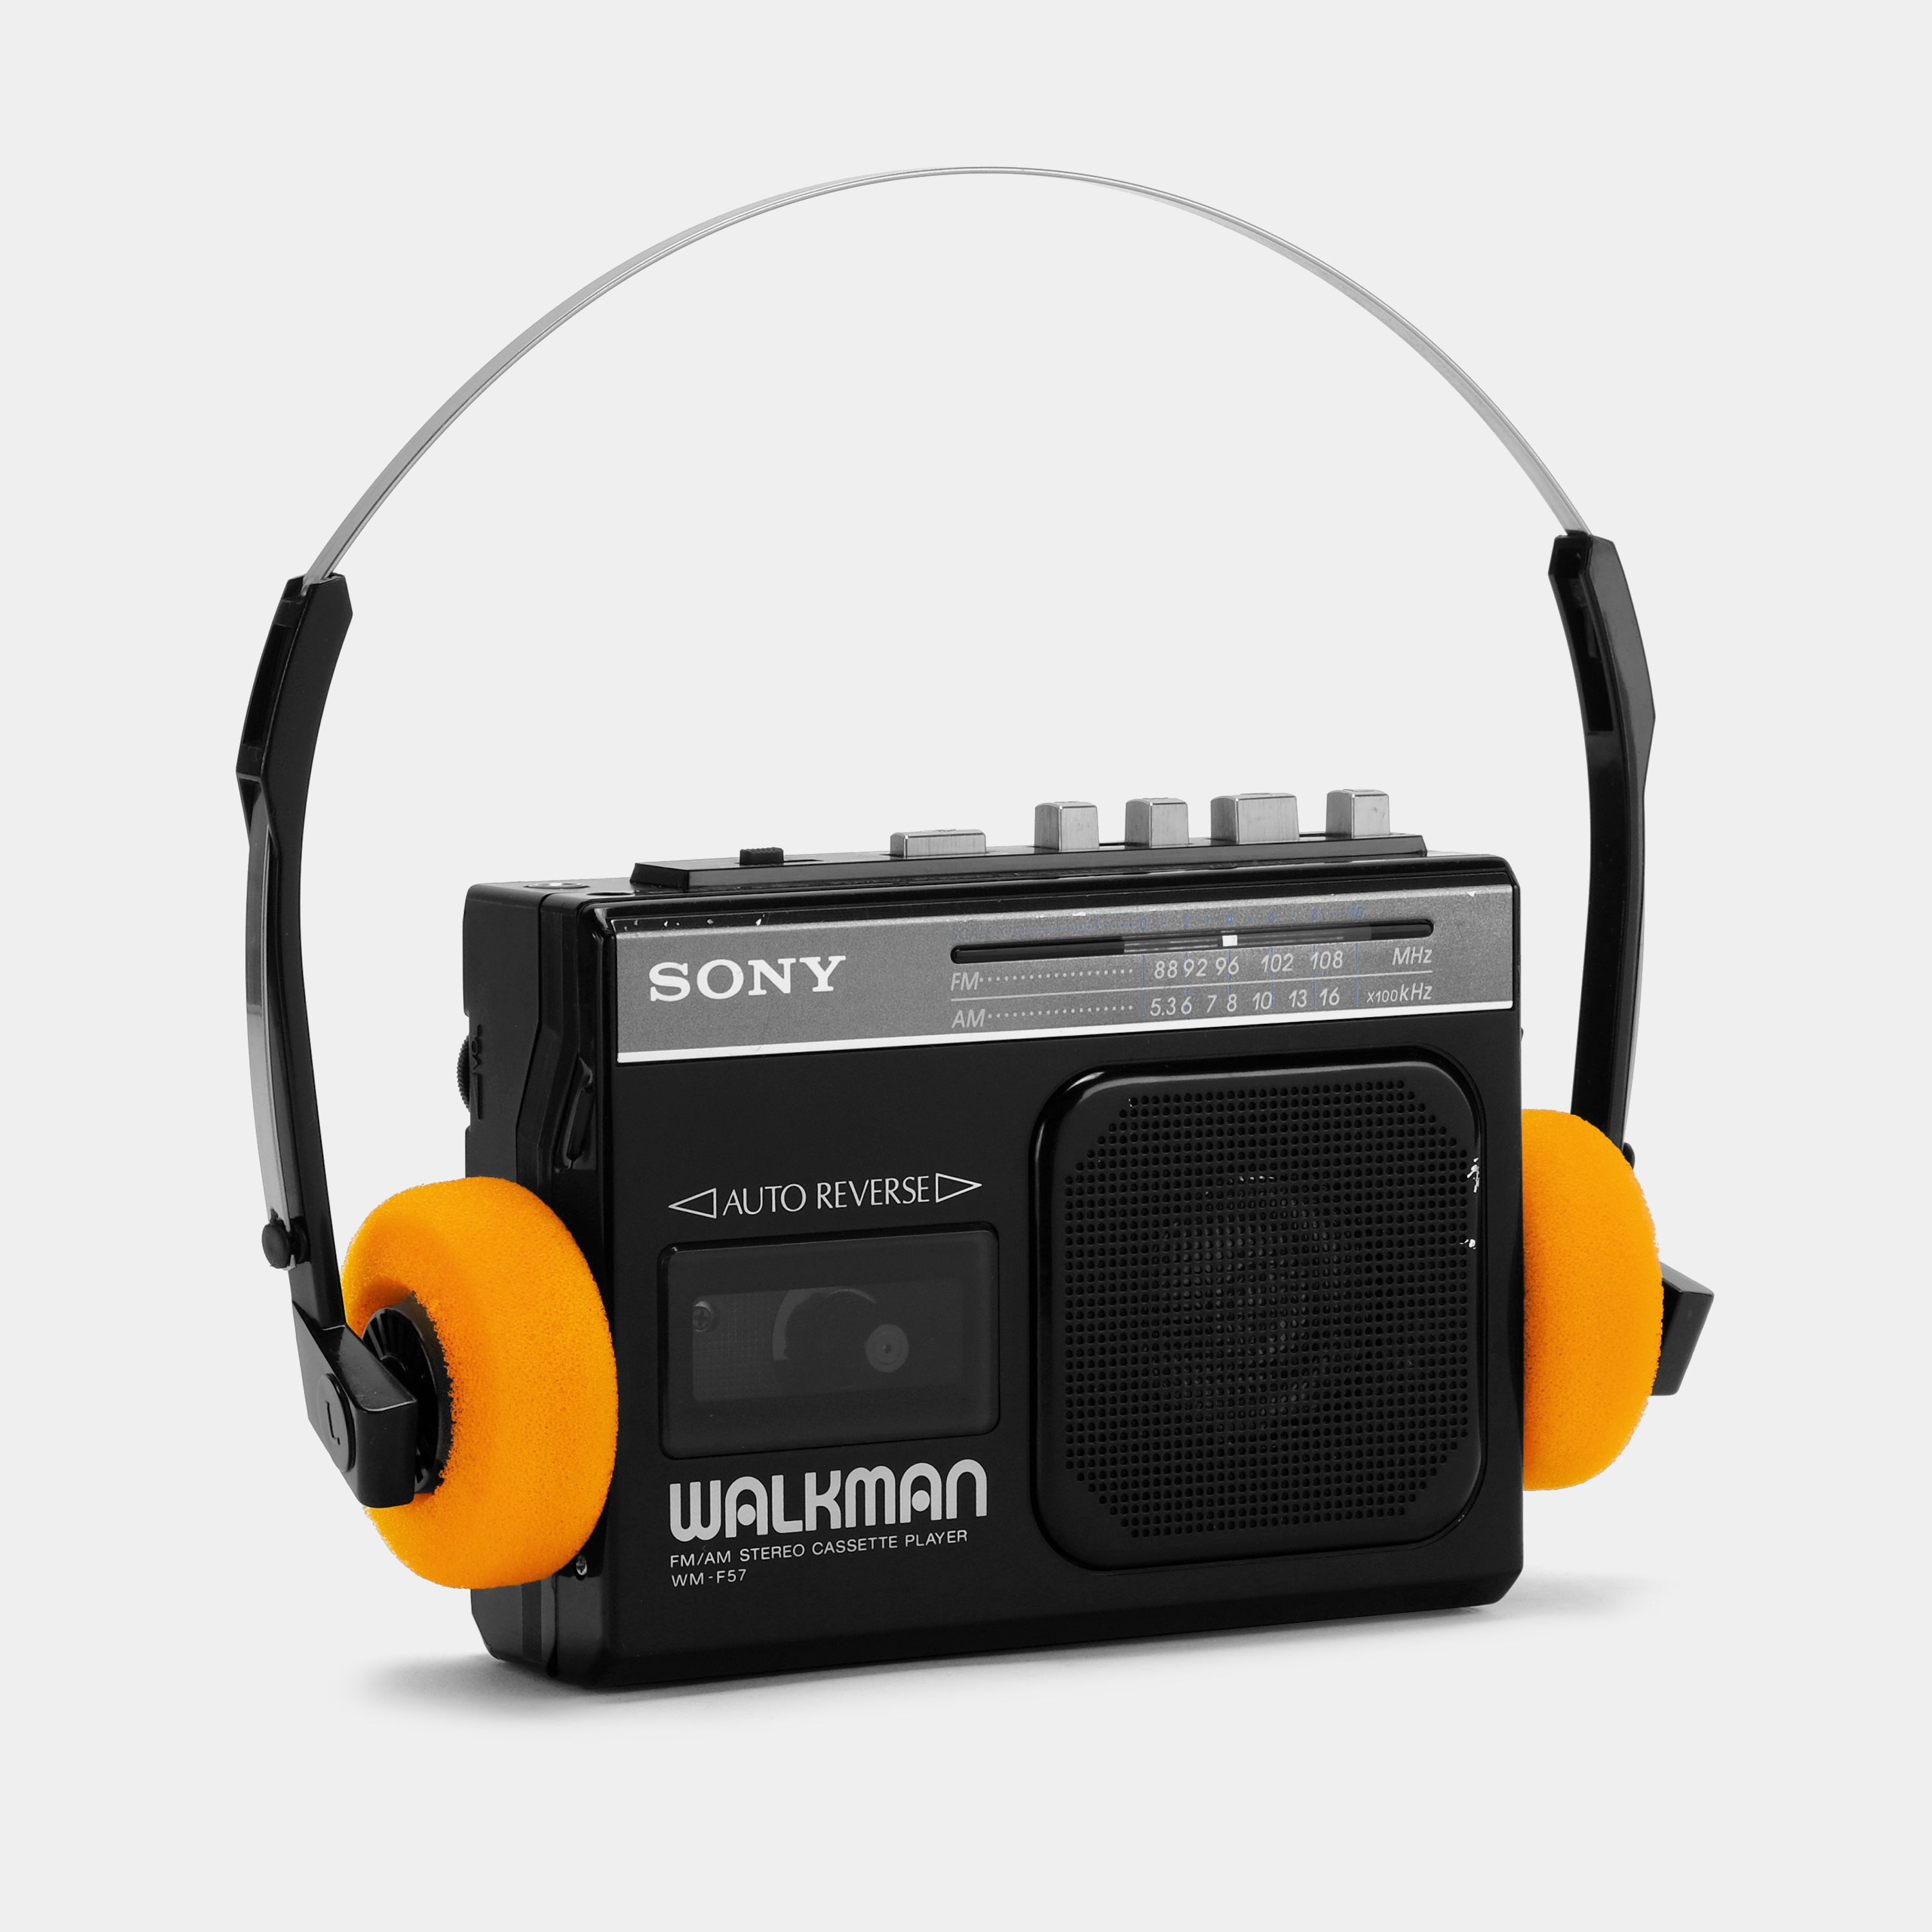 Sony Walkman WM-57 FM/AM Stereo Cassette Player